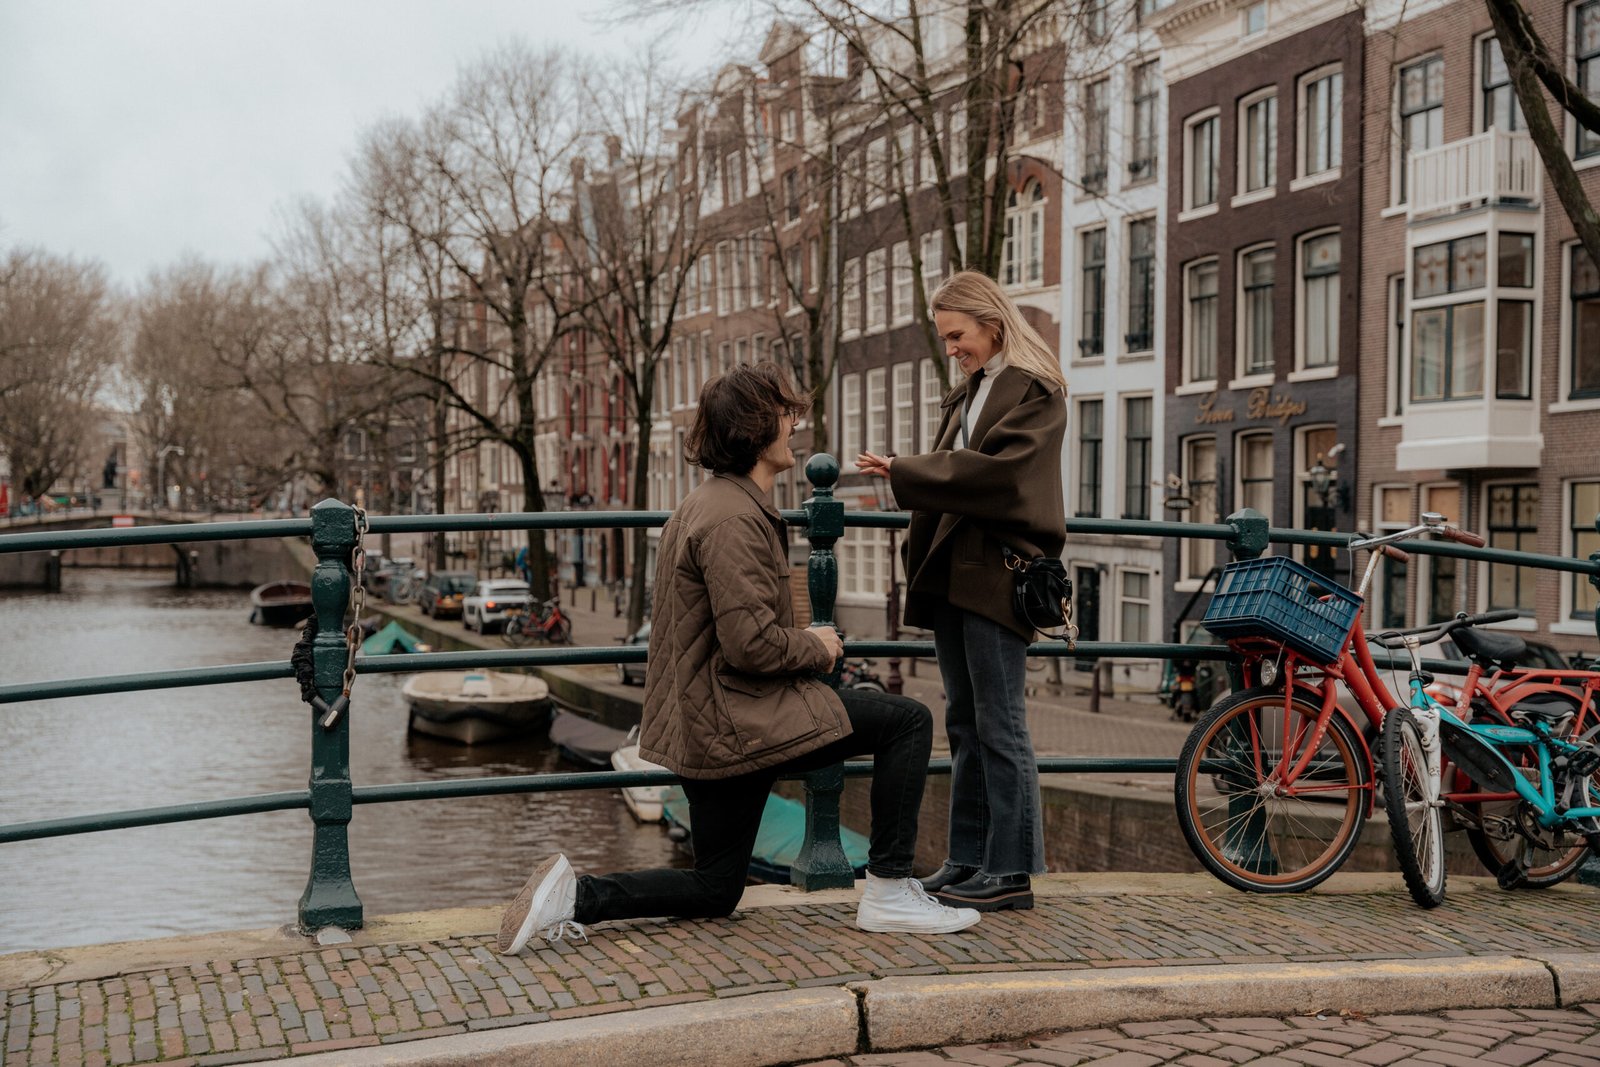 Secret proposal in Amsterdam